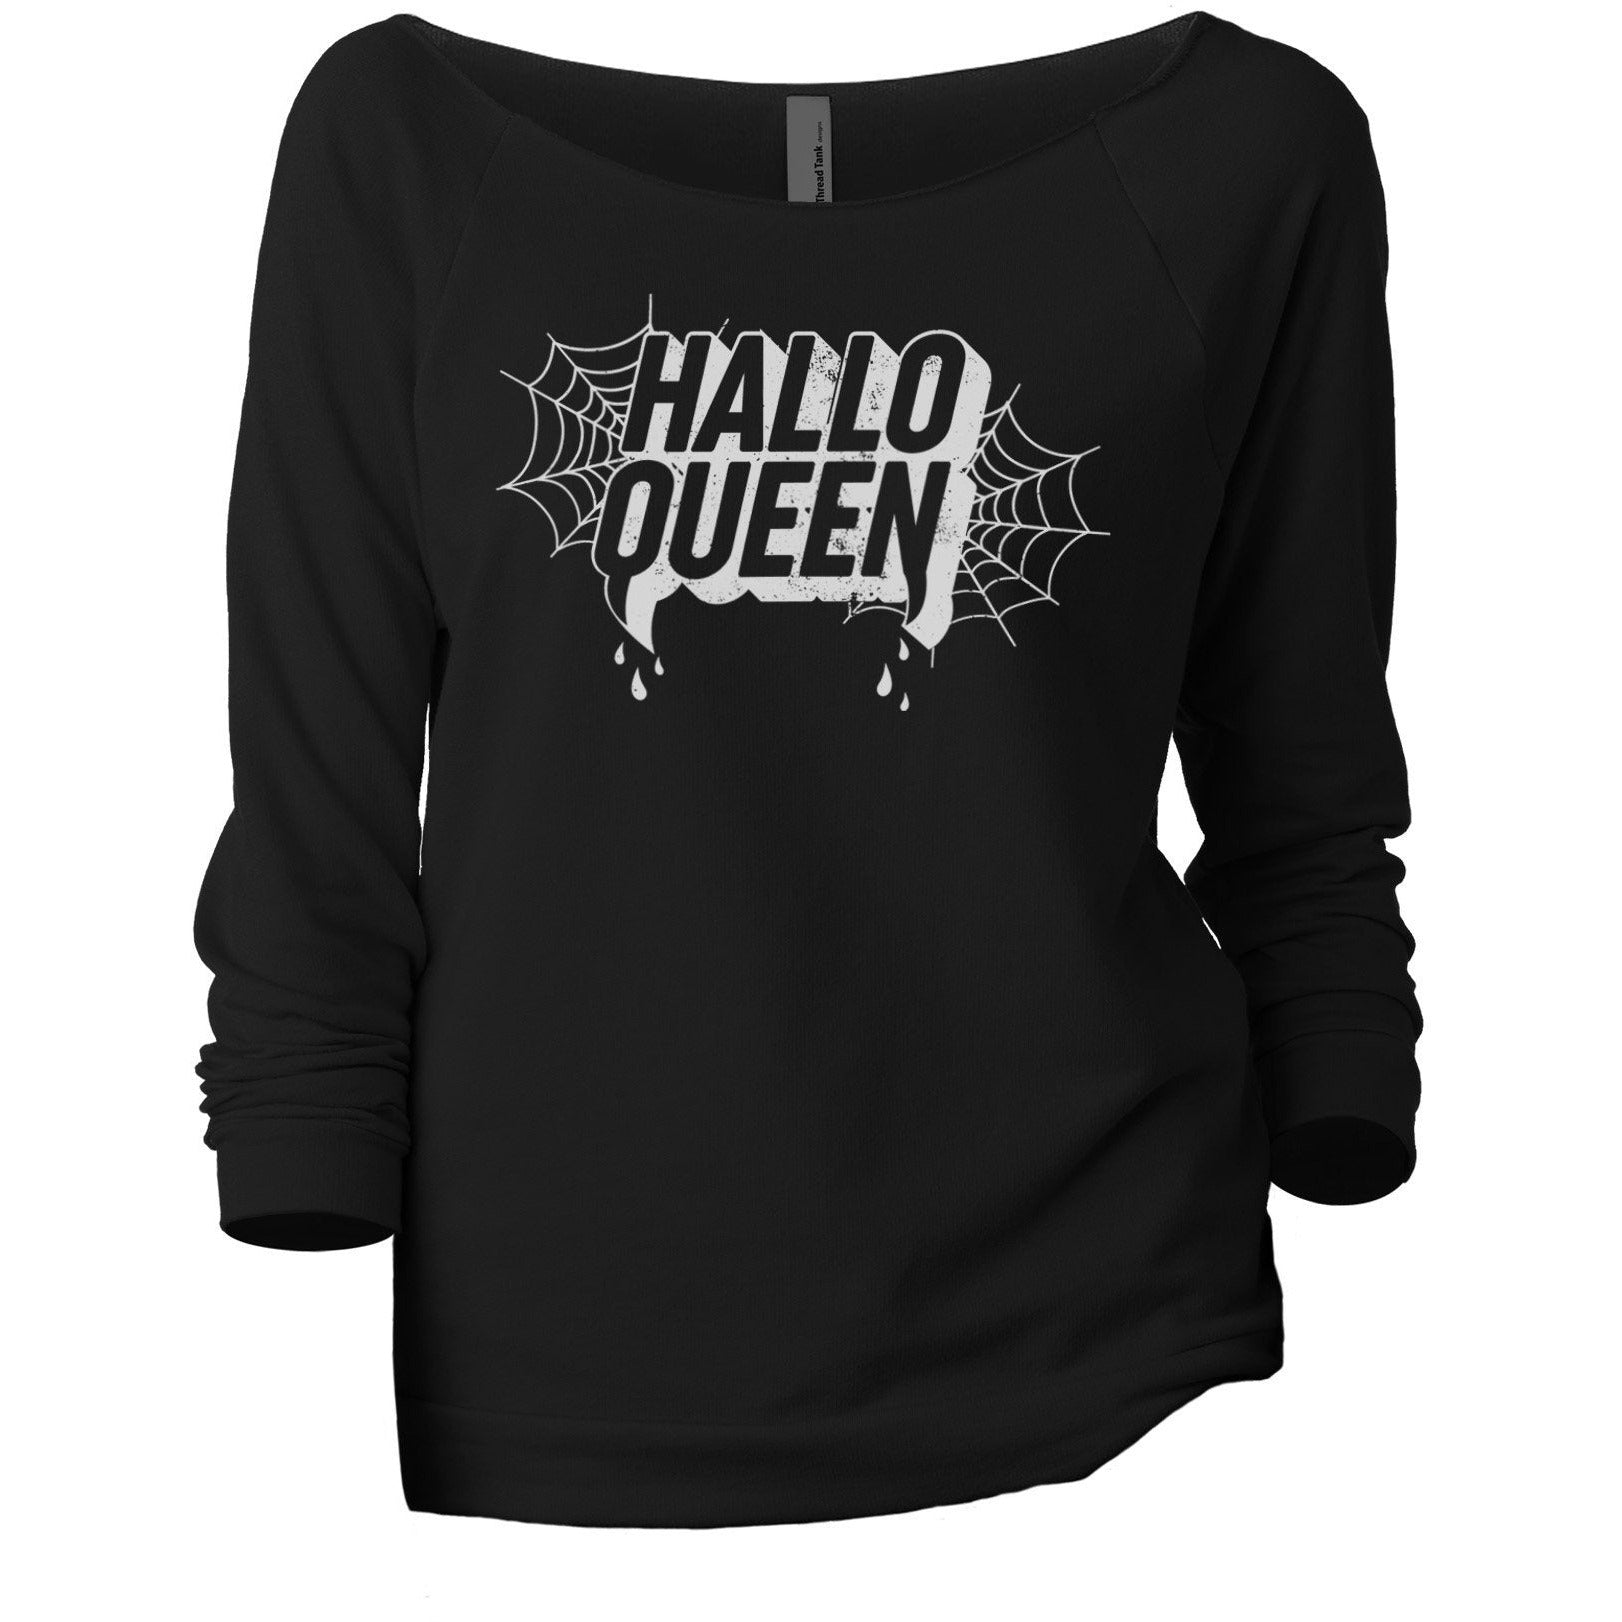 Hallo Queen Women's Graphic Printed Lightweight Slouchy 3/4 Sleeves Sweatshirt Black